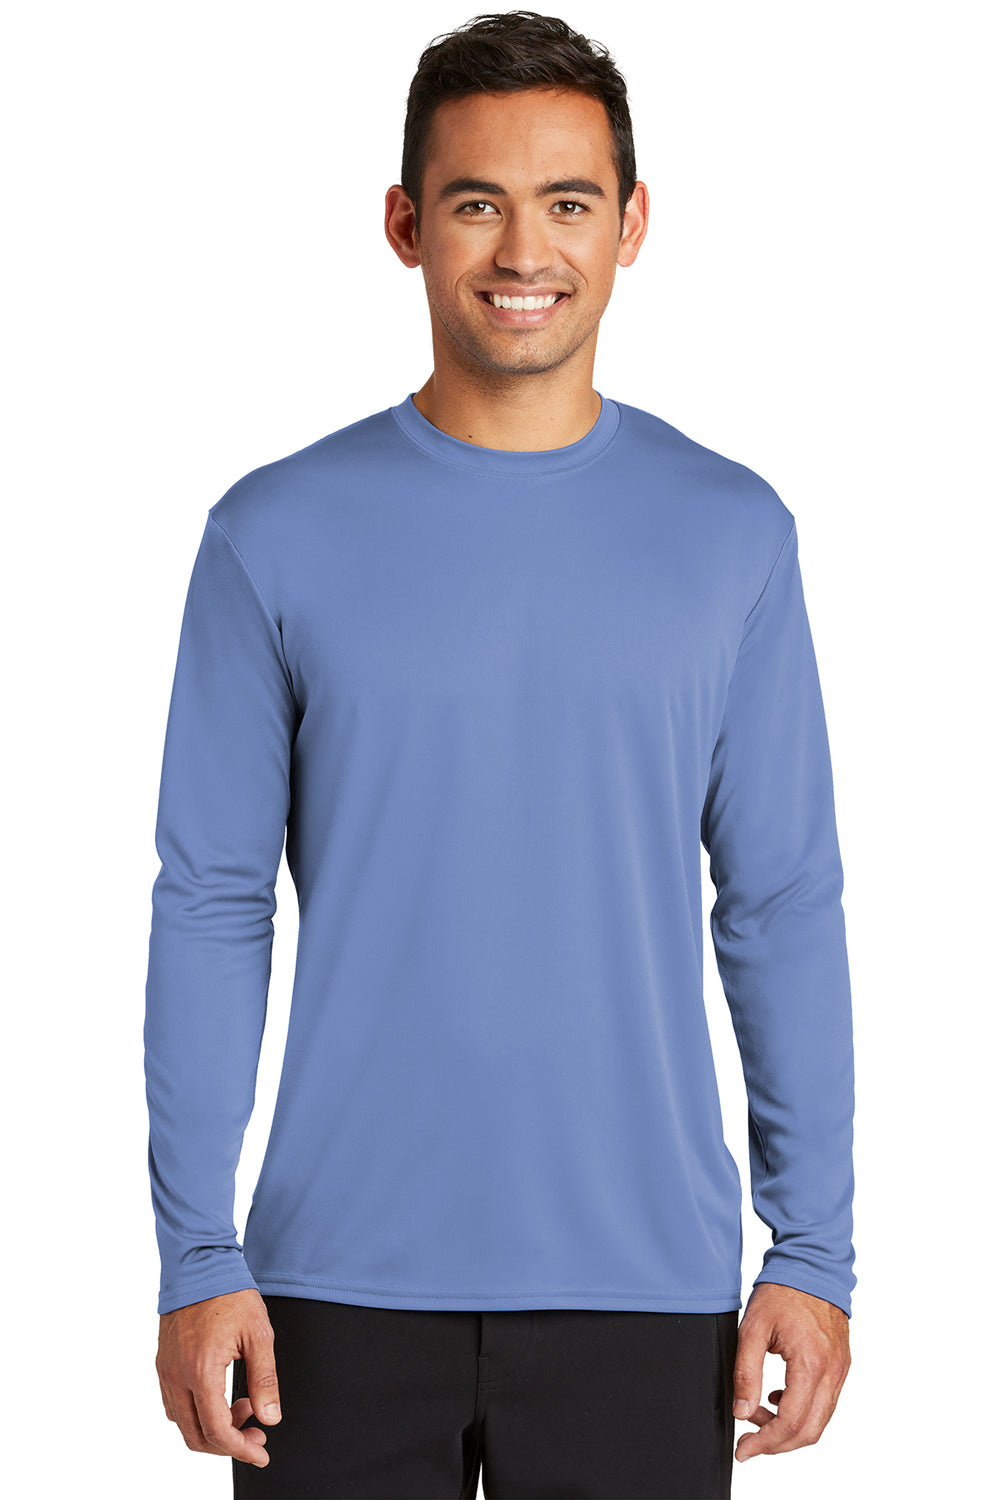 Port & Company PC380LS Mens Dry Zone Performance Moisture Wicking Long Sleeve Crewneck T-Shirt Carolina Blue Front